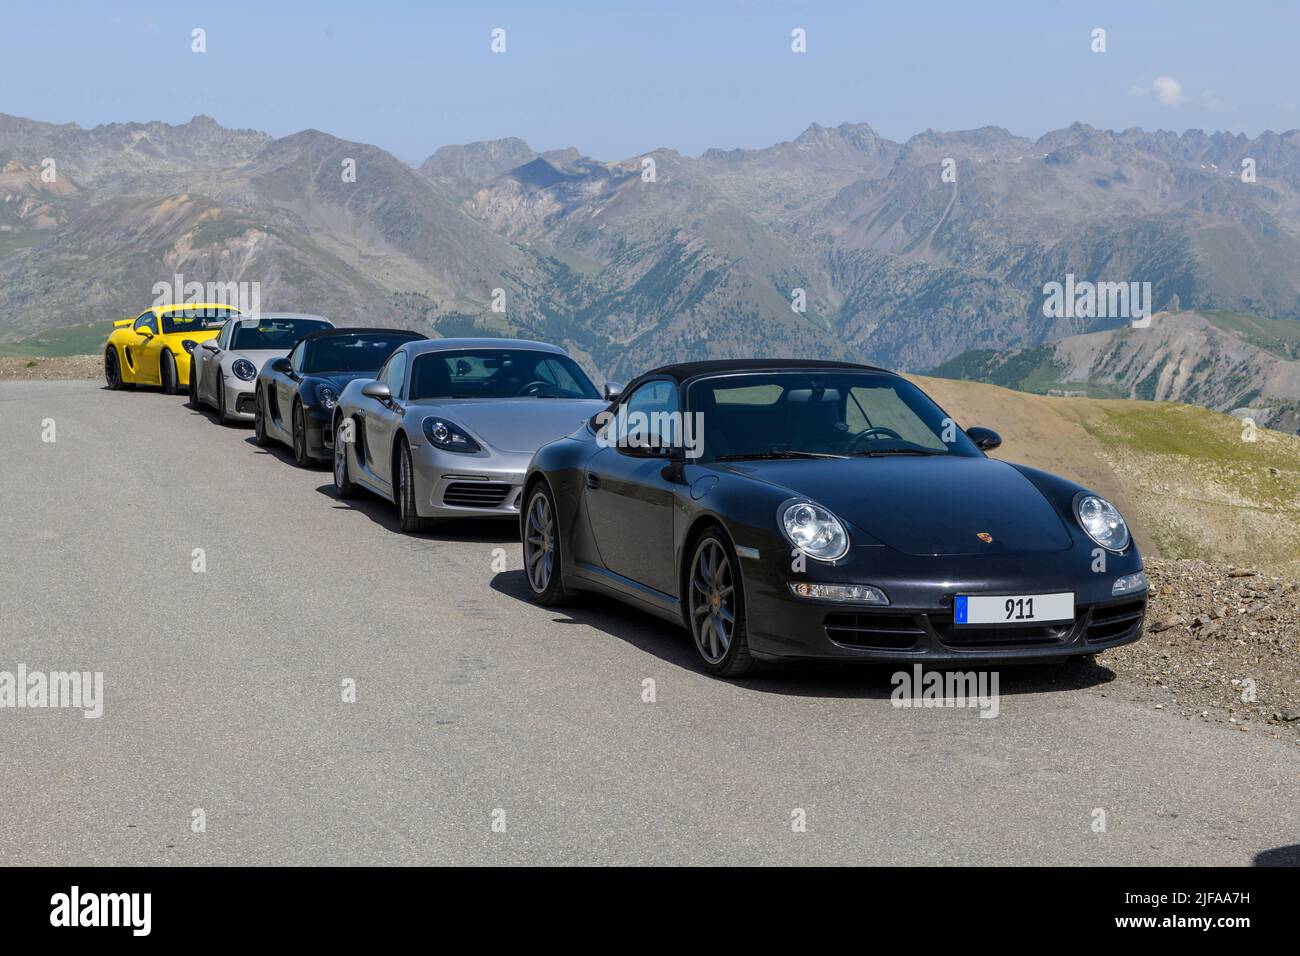 Cinco coches deportivos Porsche en 2802 metros de carretera pavimentada más alta en los Alpes, Cime de la Bonette, el Parque Nacional de Mercantour, Jausiers, Alpes-de-Haute-Provence Foto de stock